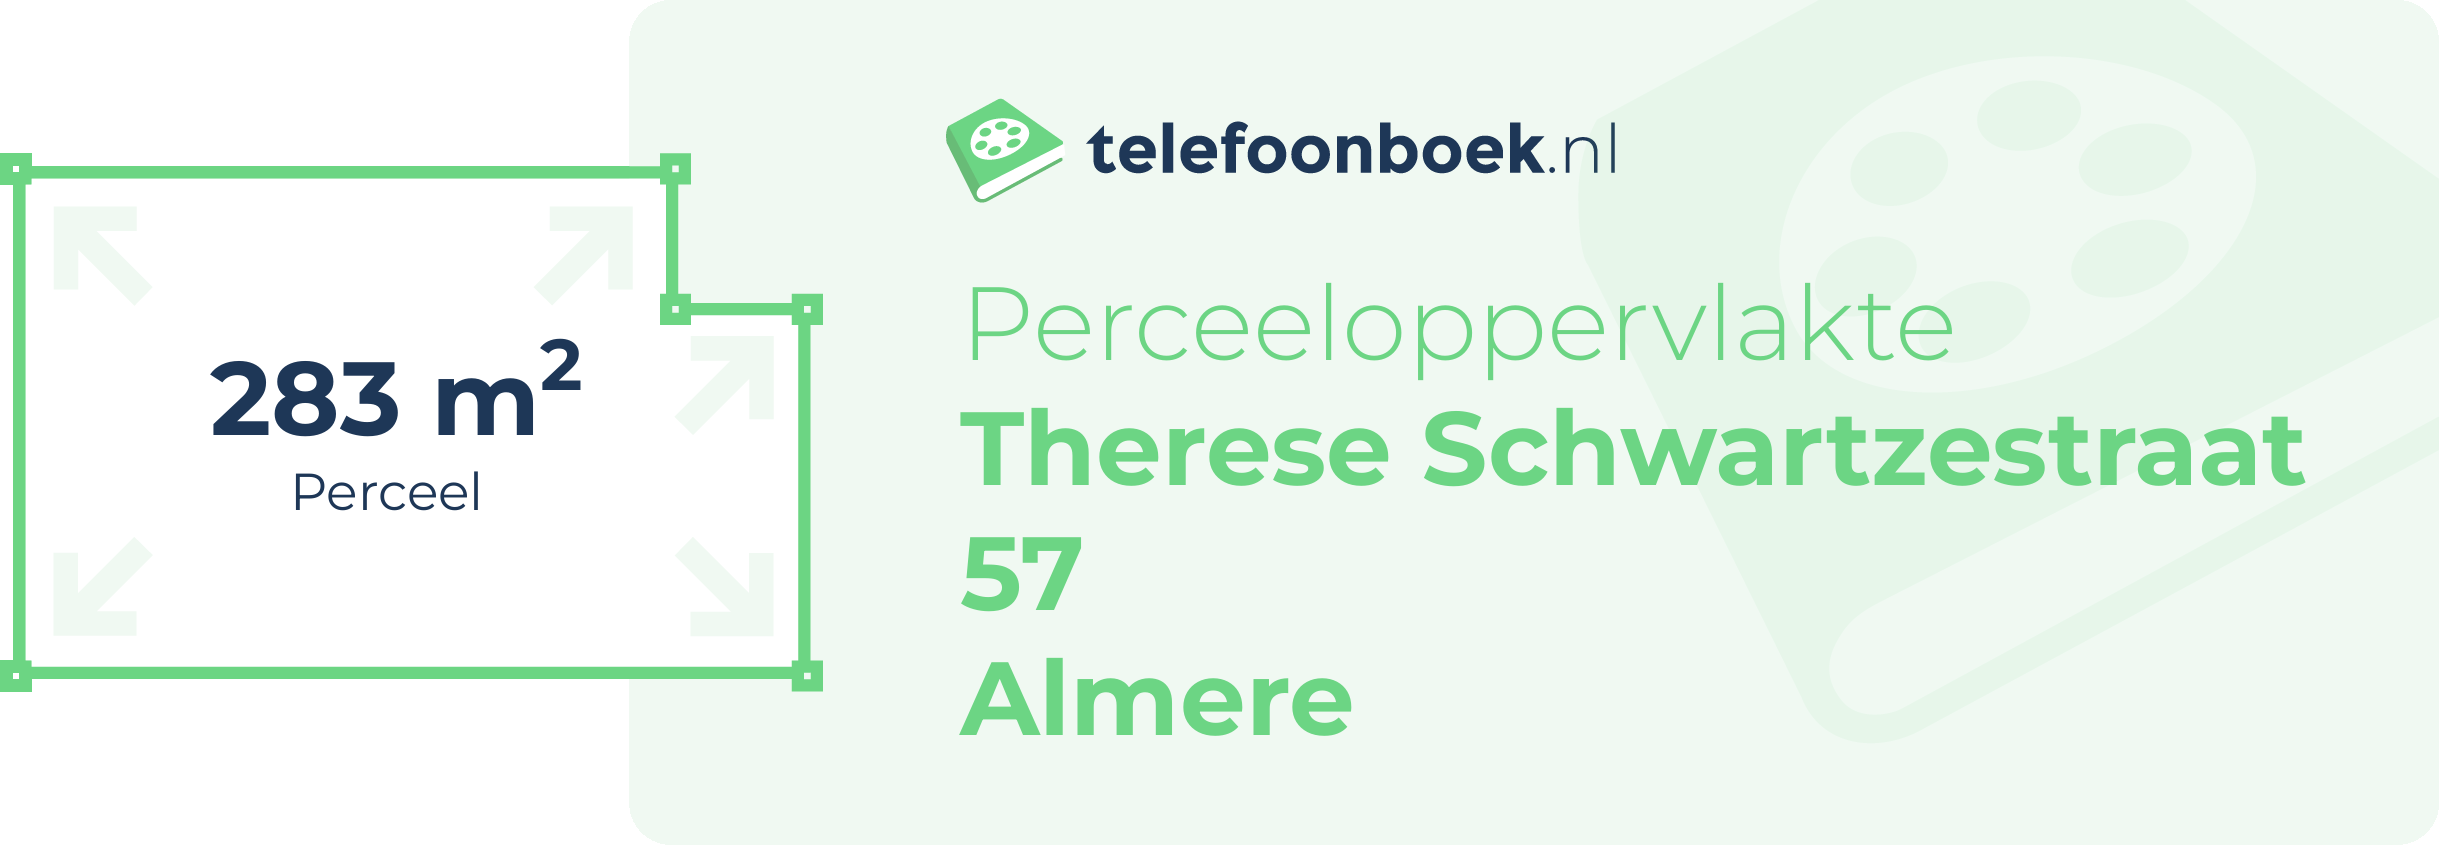 Perceeloppervlakte Therese Schwartzestraat 57 Almere